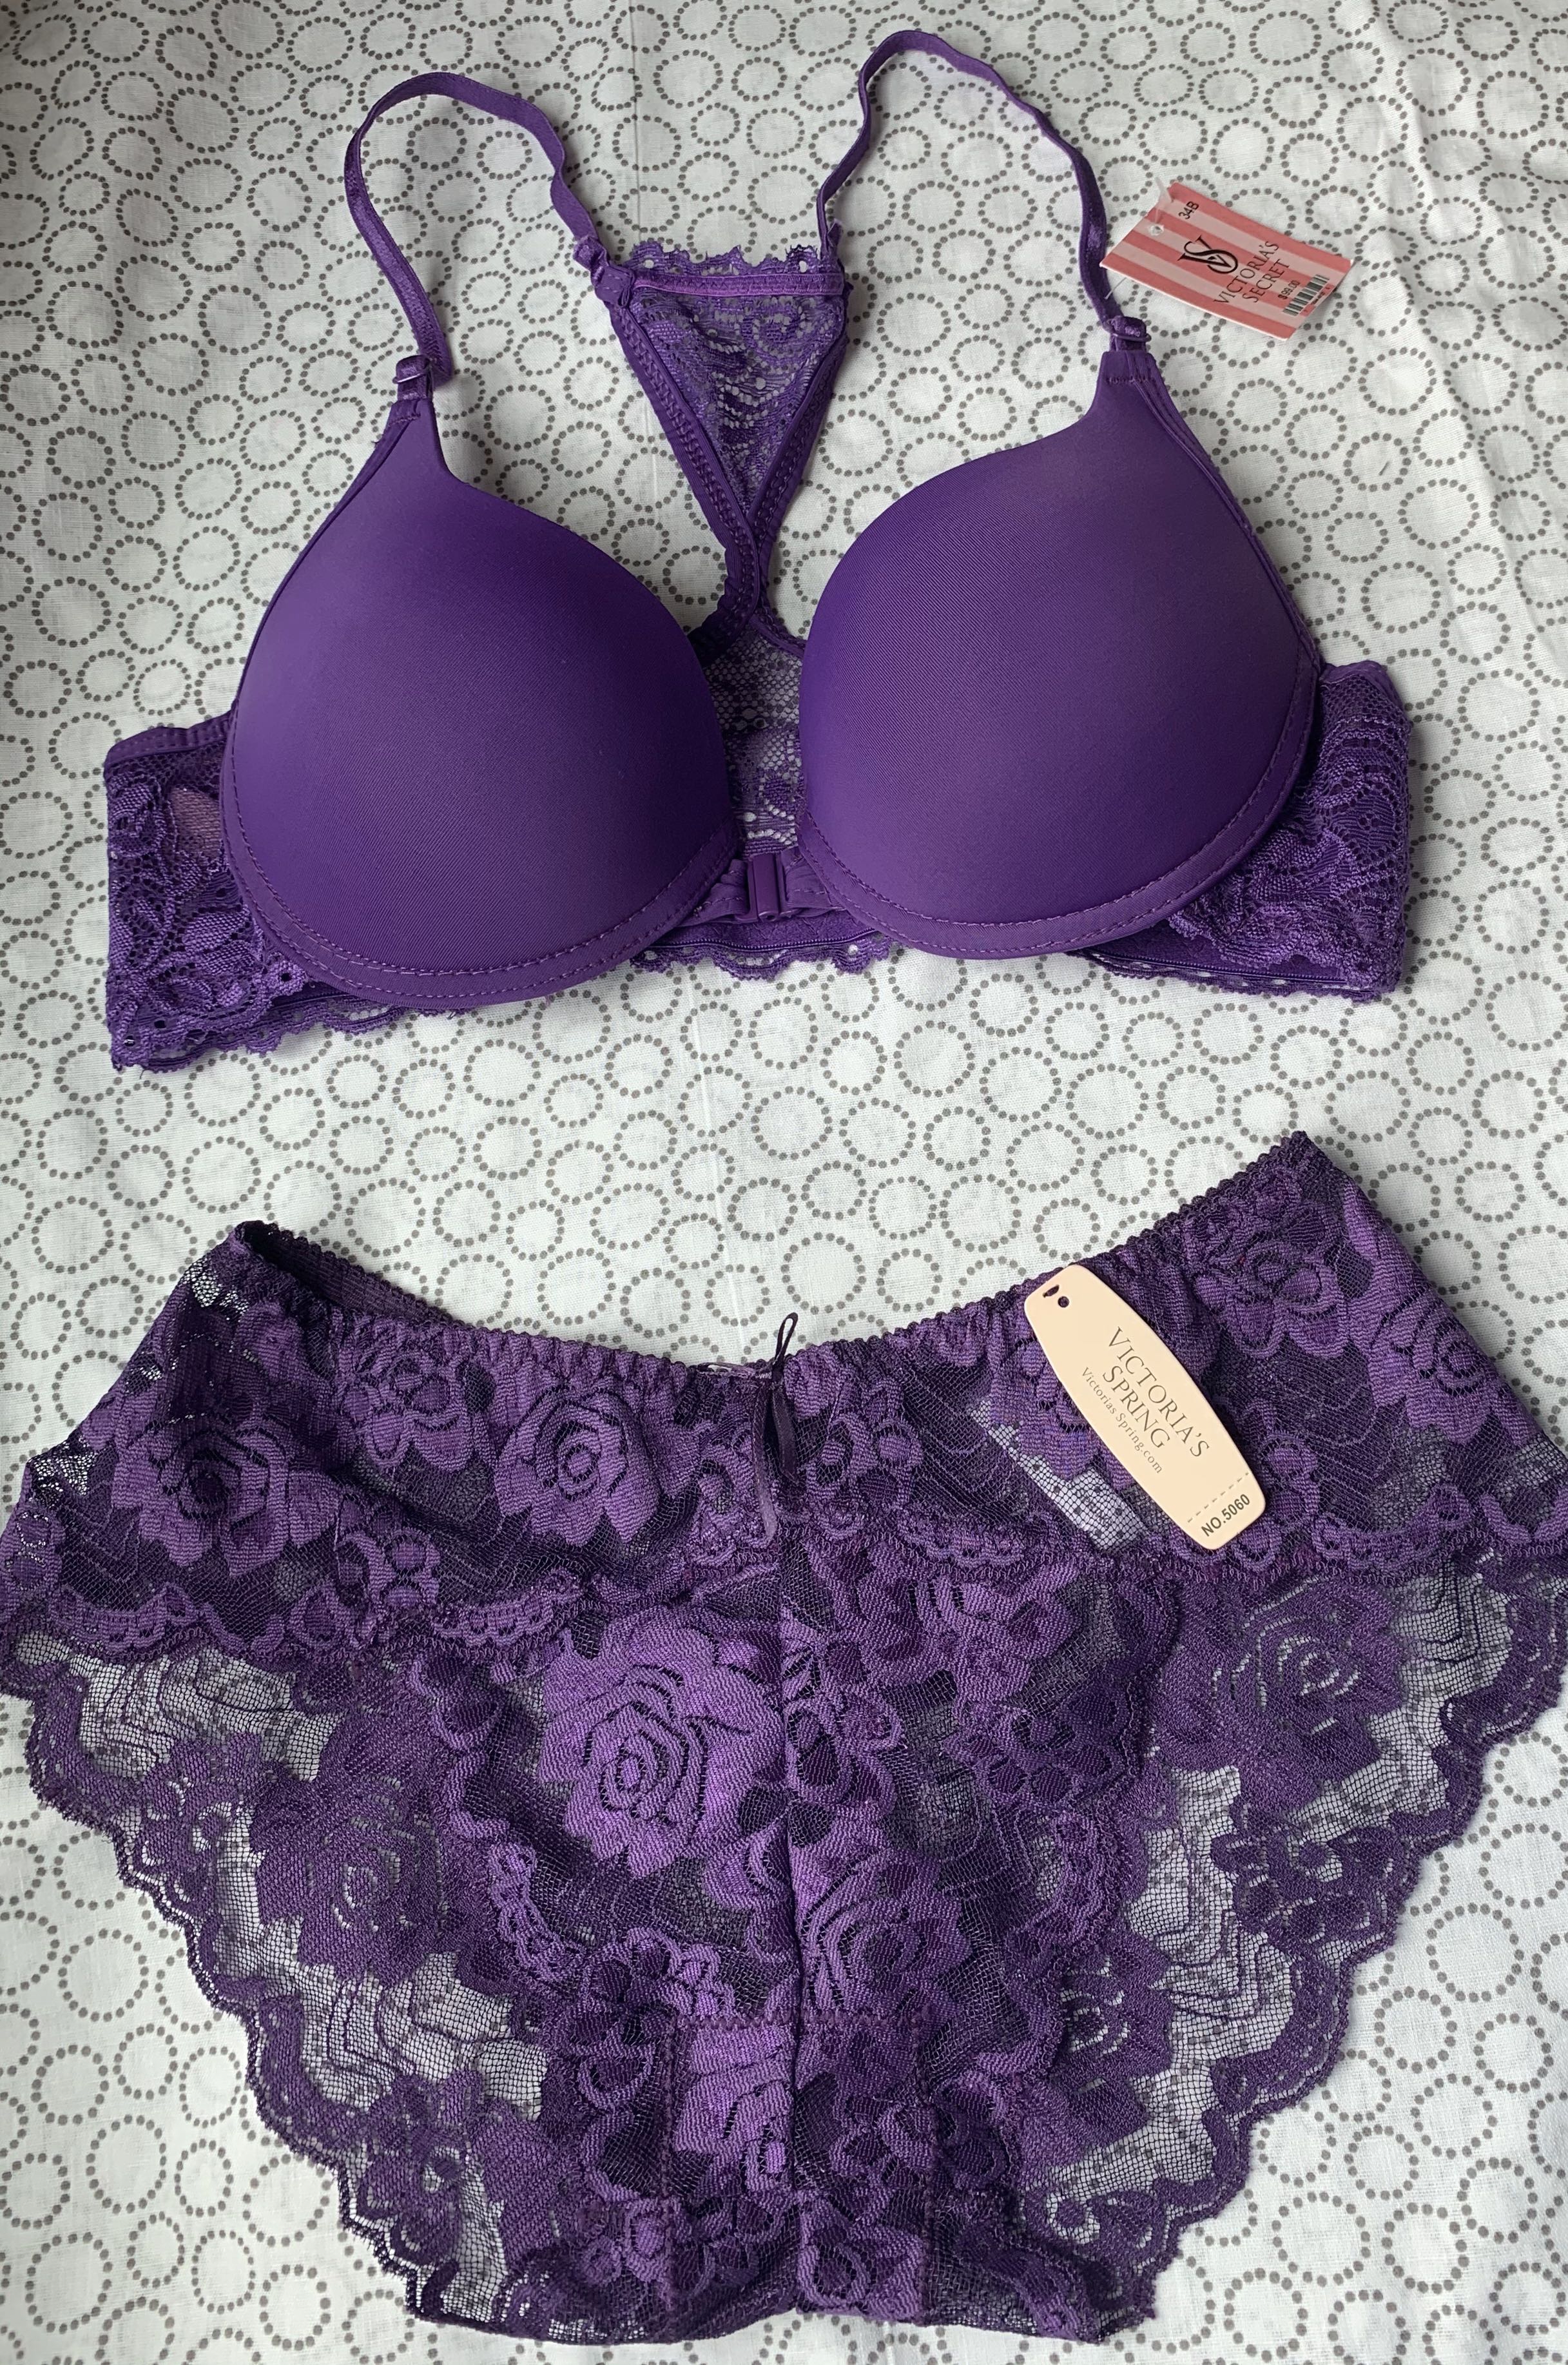 https://media.karousell.com/media/photos/products/2020/03/16/victoria_secret_lingerie__bra__underwear__panty_set_1584315672_d23d0be2.jpg